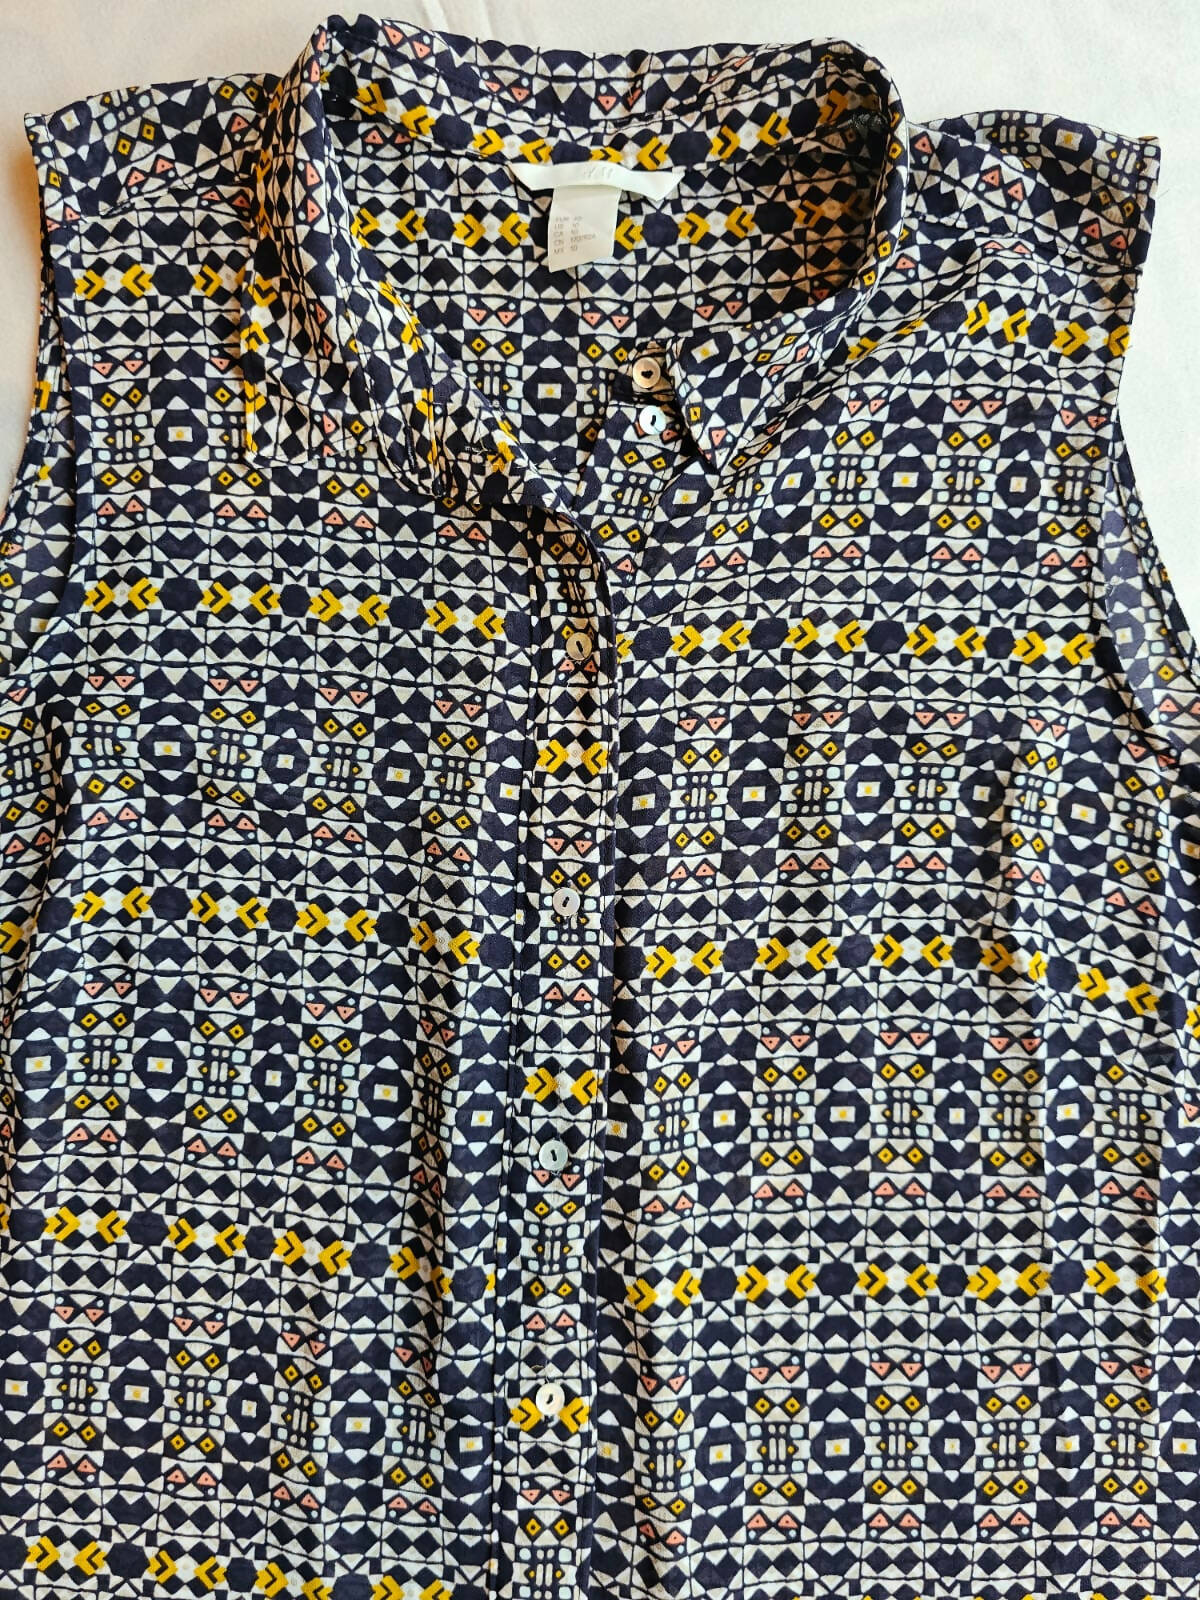 H & M | Sleeveless Button-up Printed Top (Size: M ) | Women kurta | Worn Once